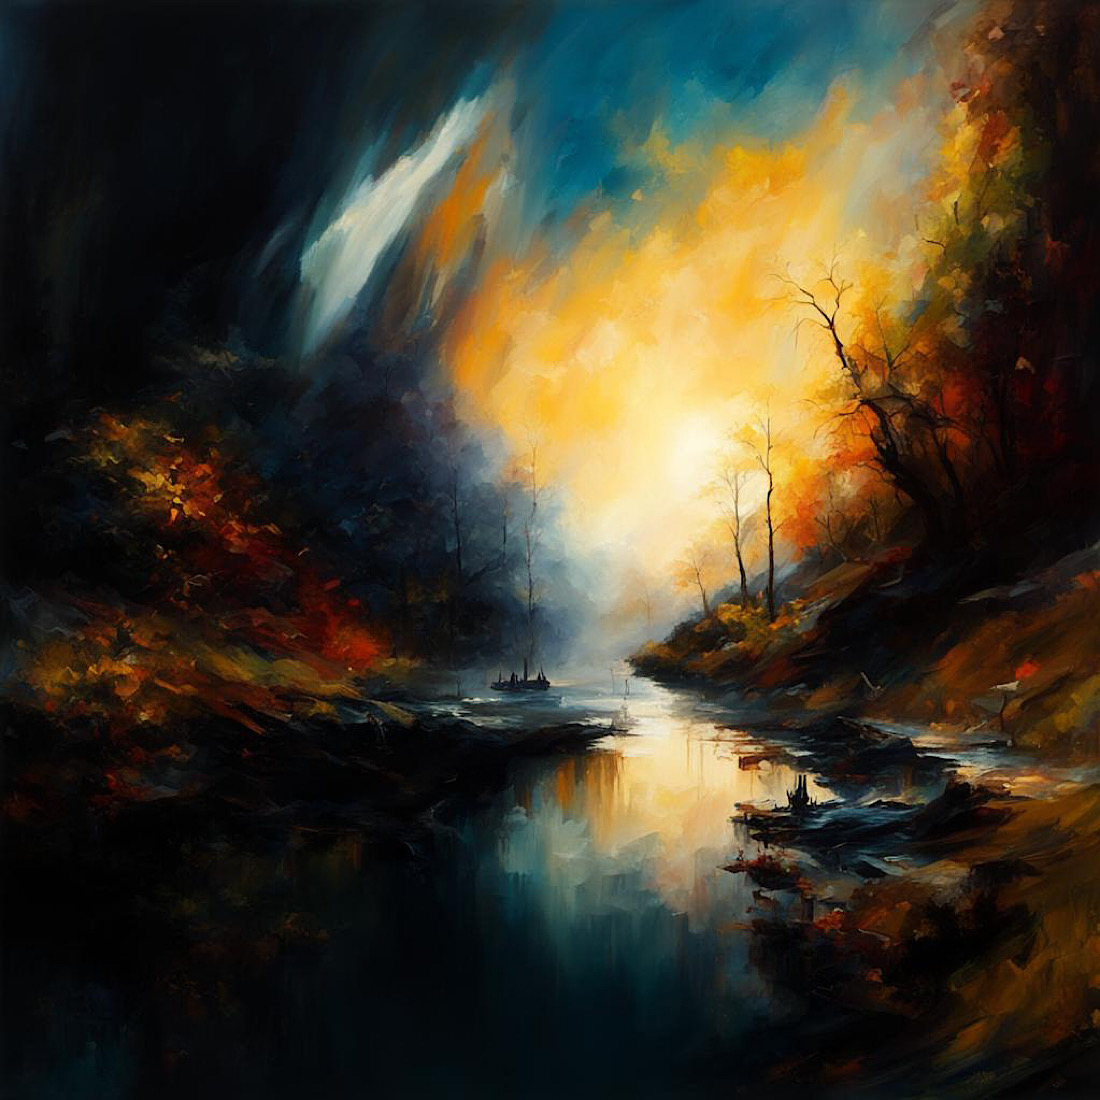 Oil painting "Landscape" preview image.